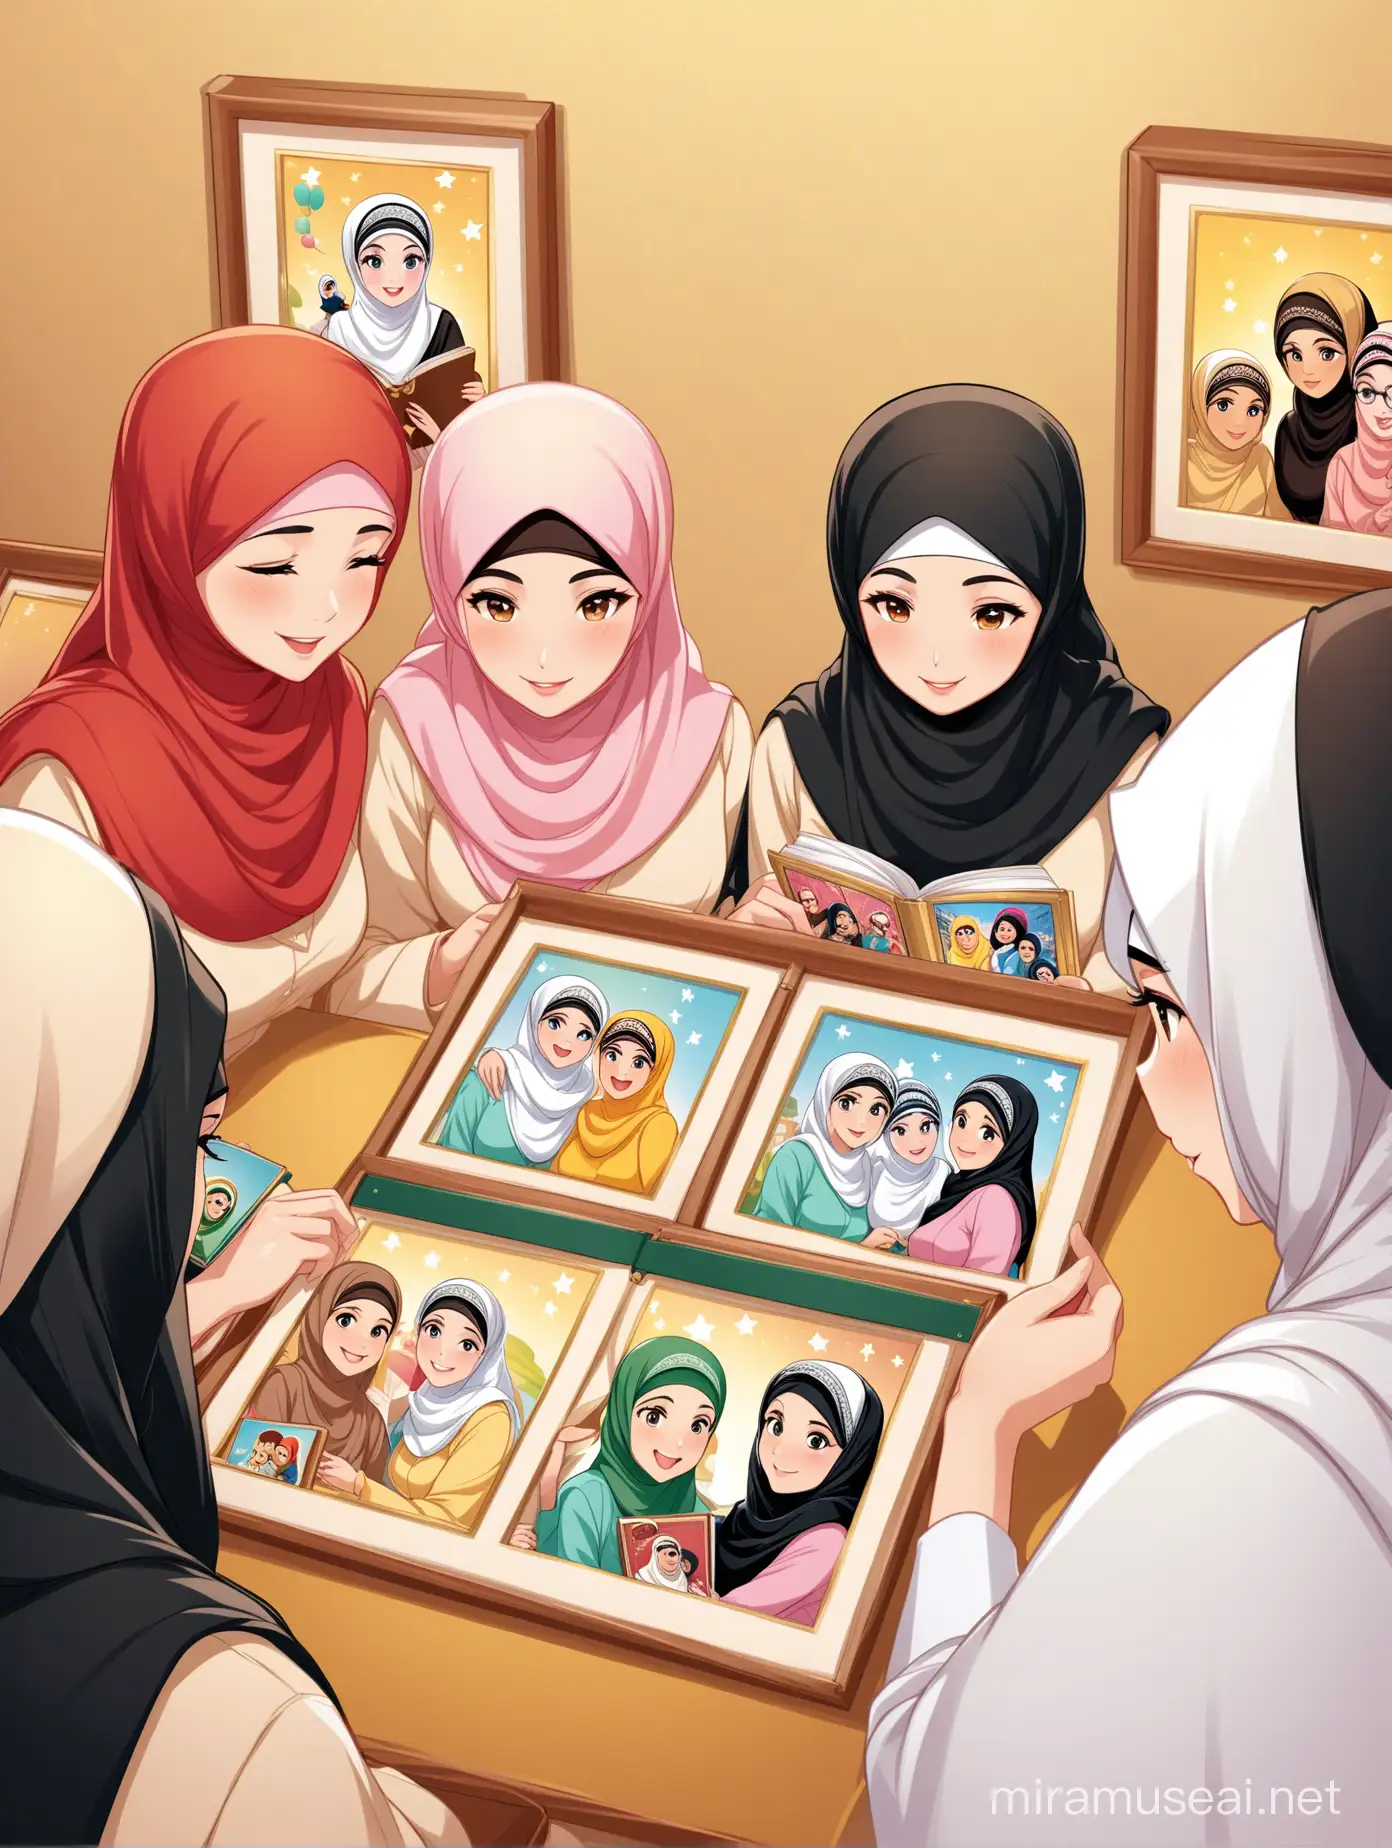 Muslim Women Exploring Disney Cartoon Photo Albums with Club Discount